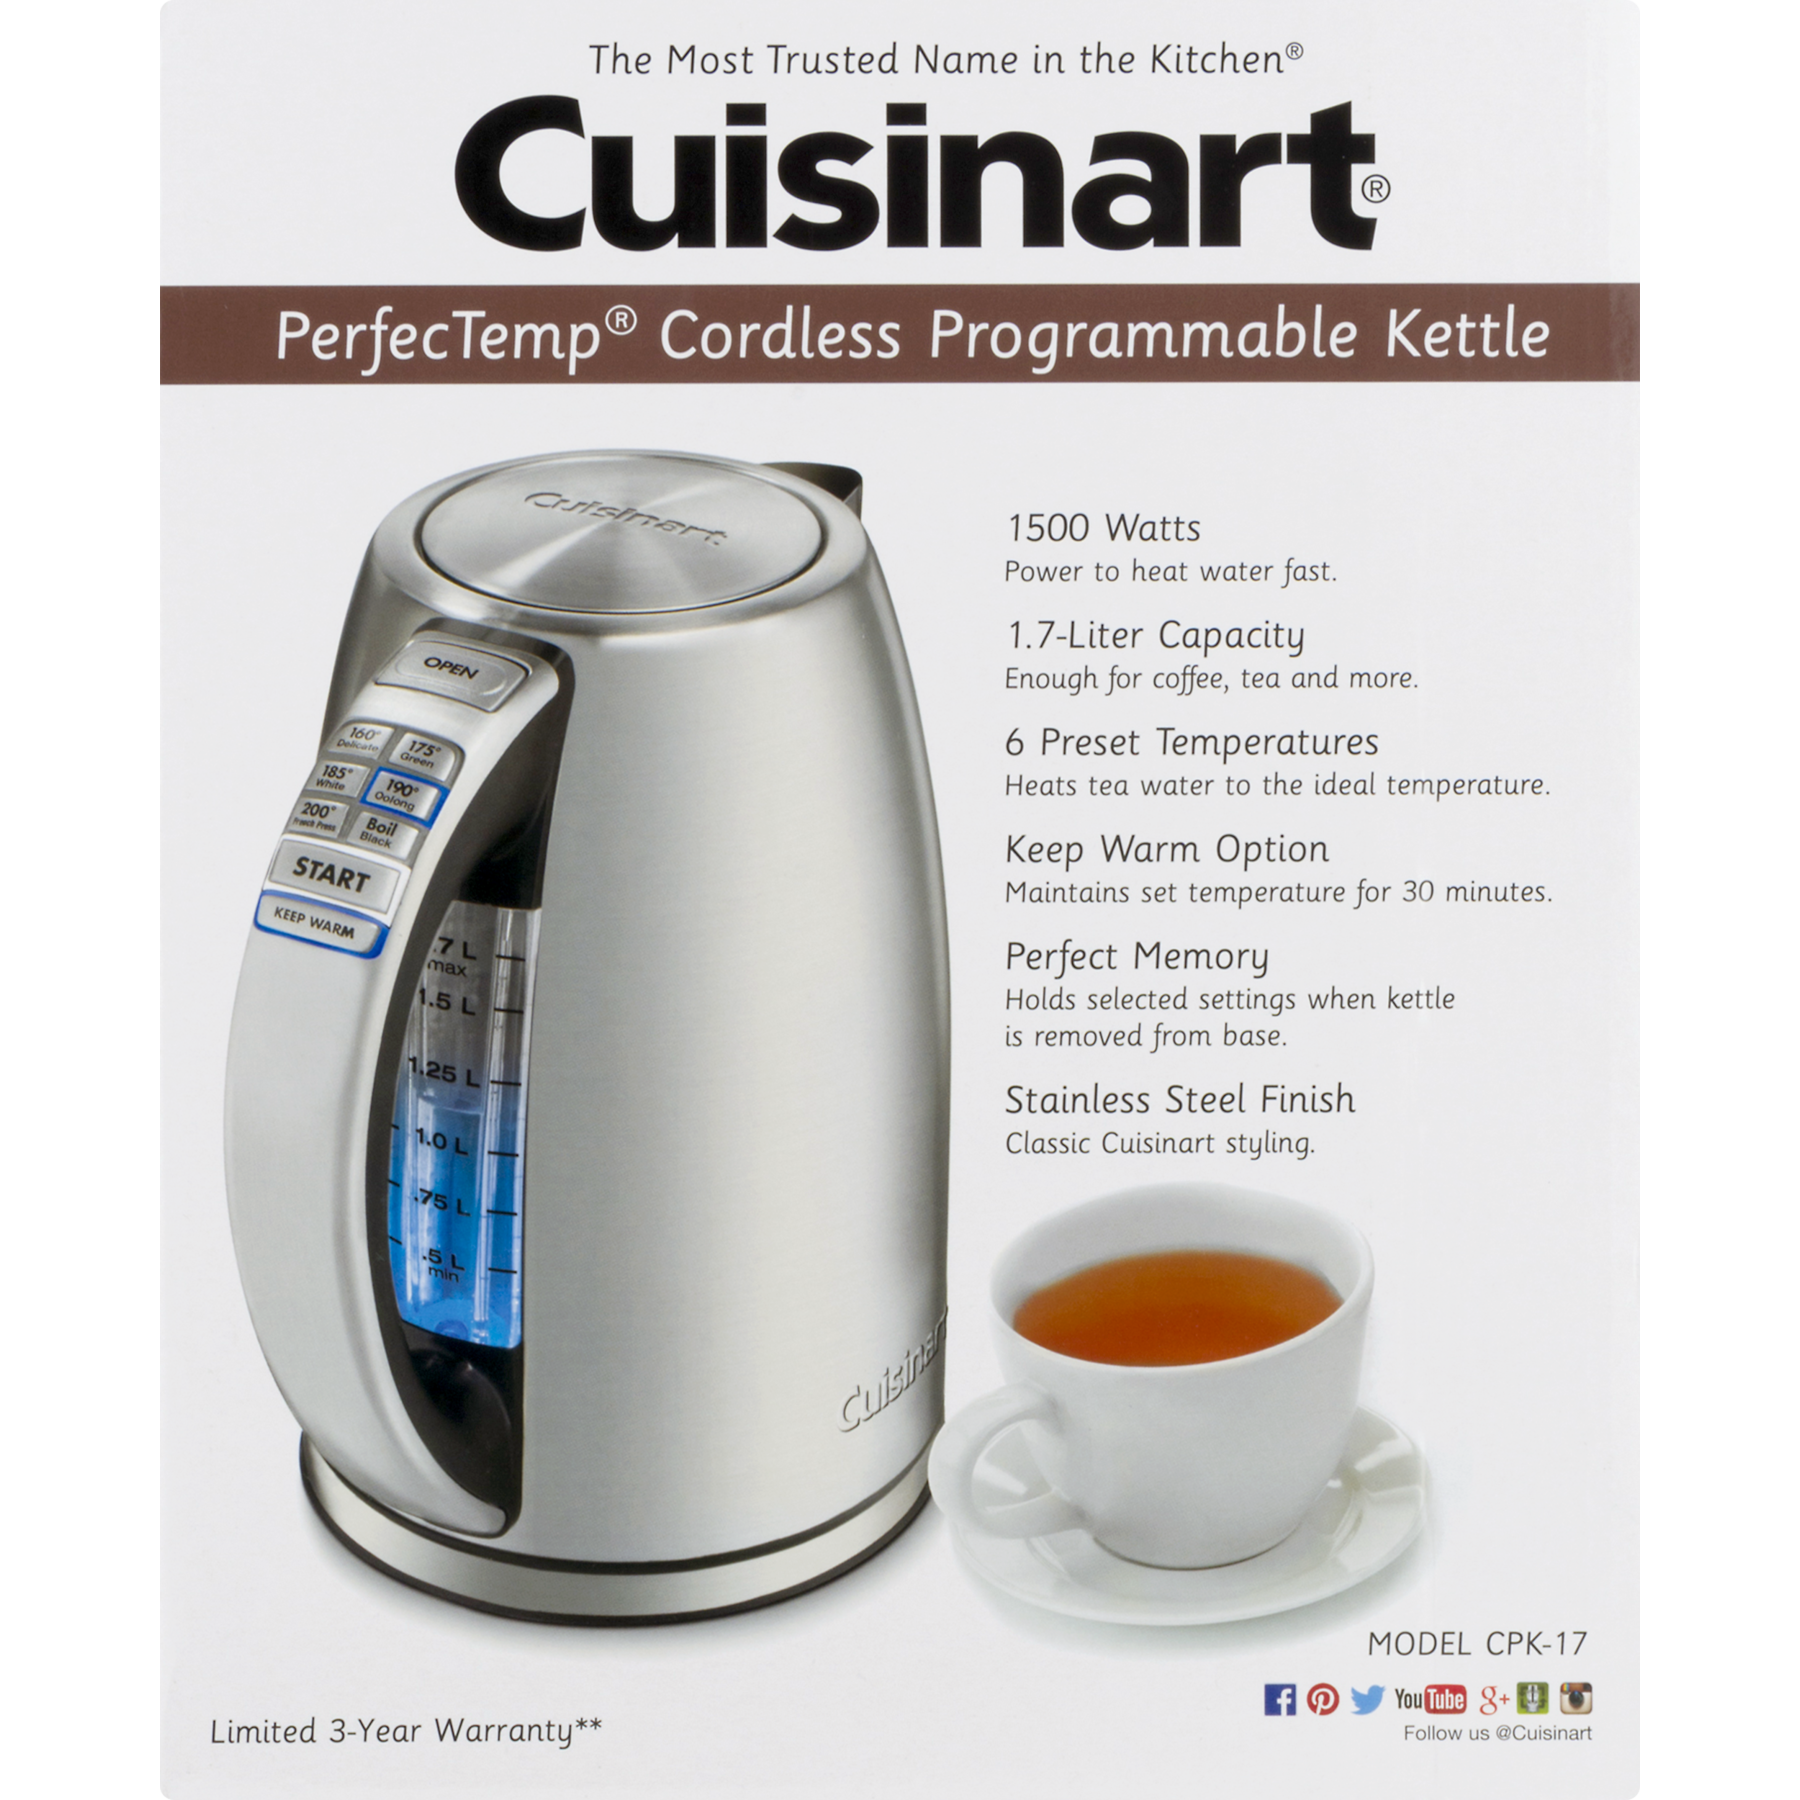 Cuisinart PerfecTemp Cordless Programmable Kettle - image 4 of 8